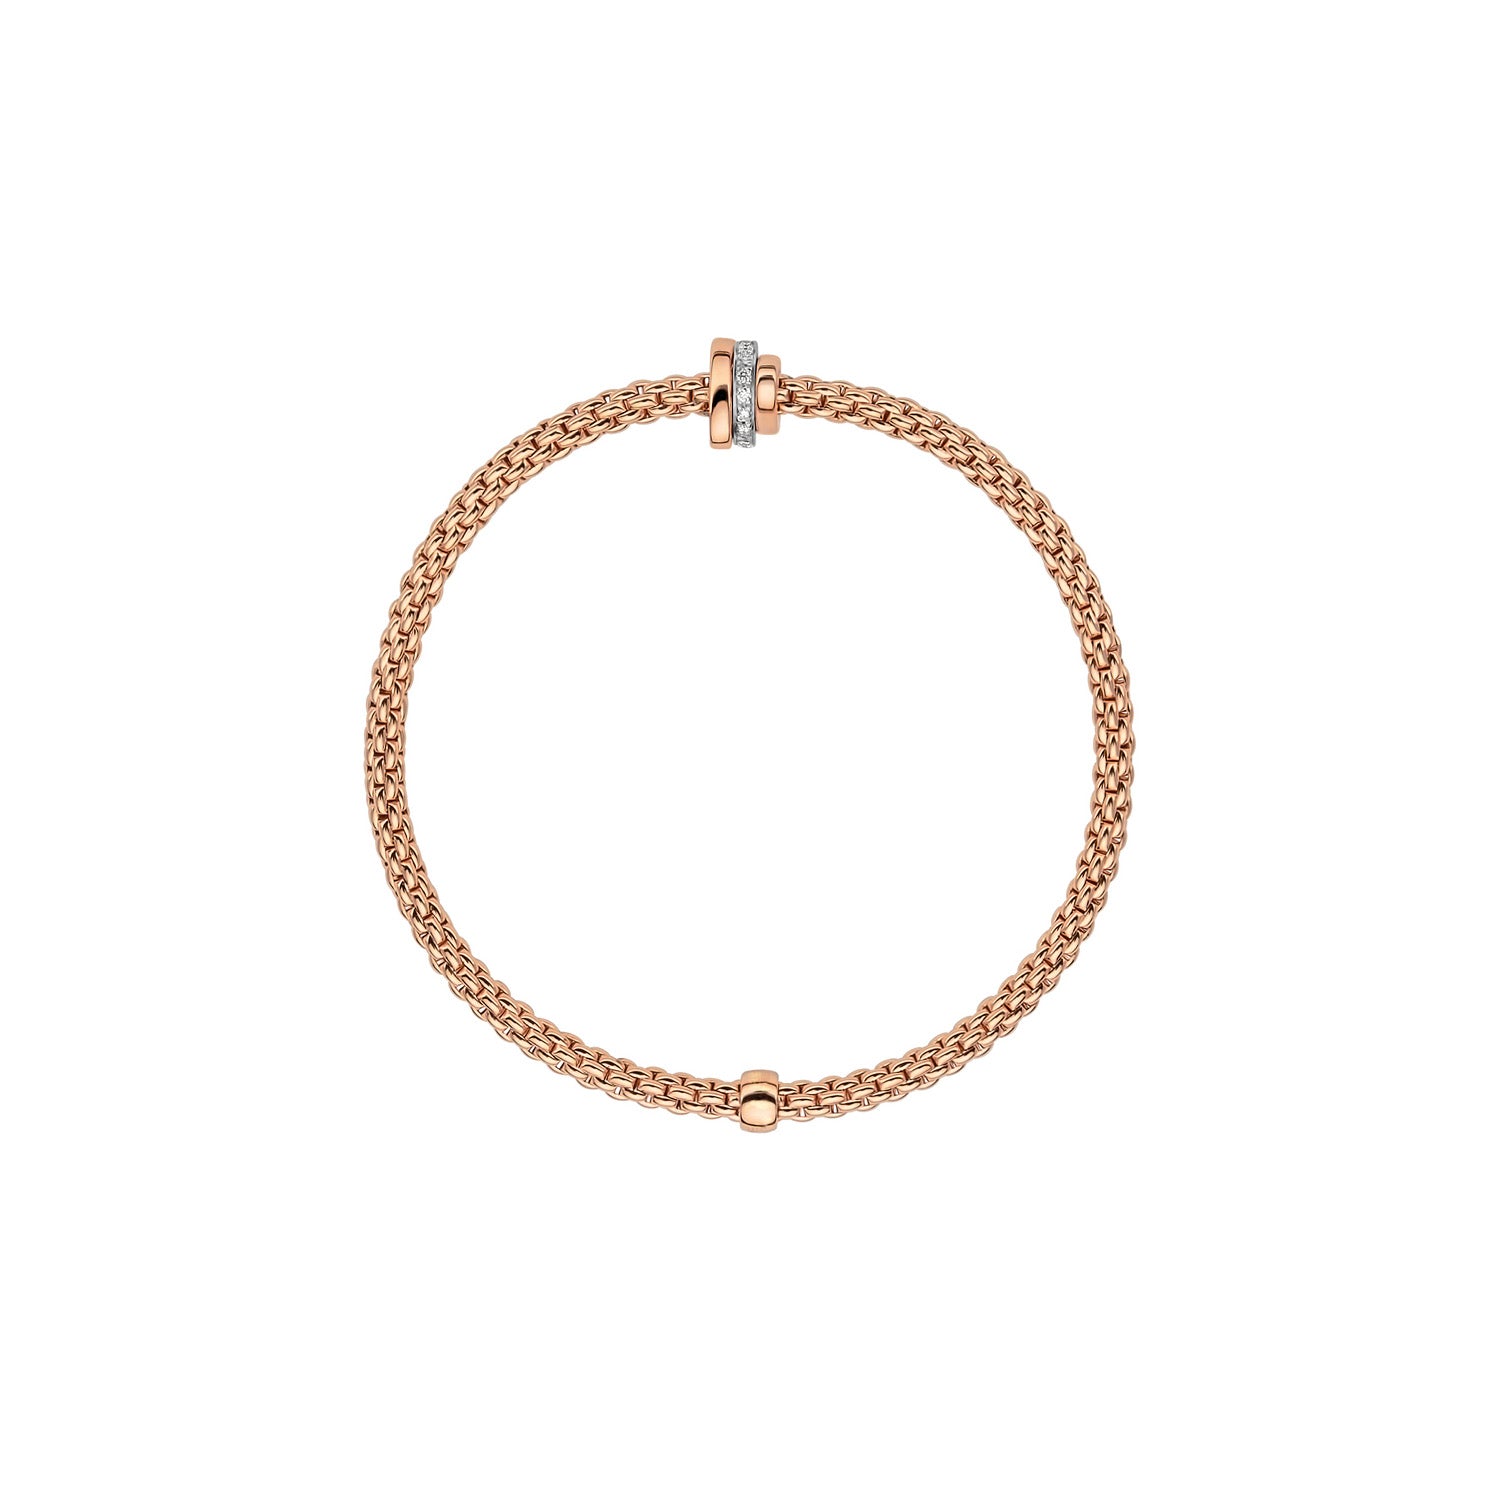 Flex'it Prima bracelet with diamonds in rose gold